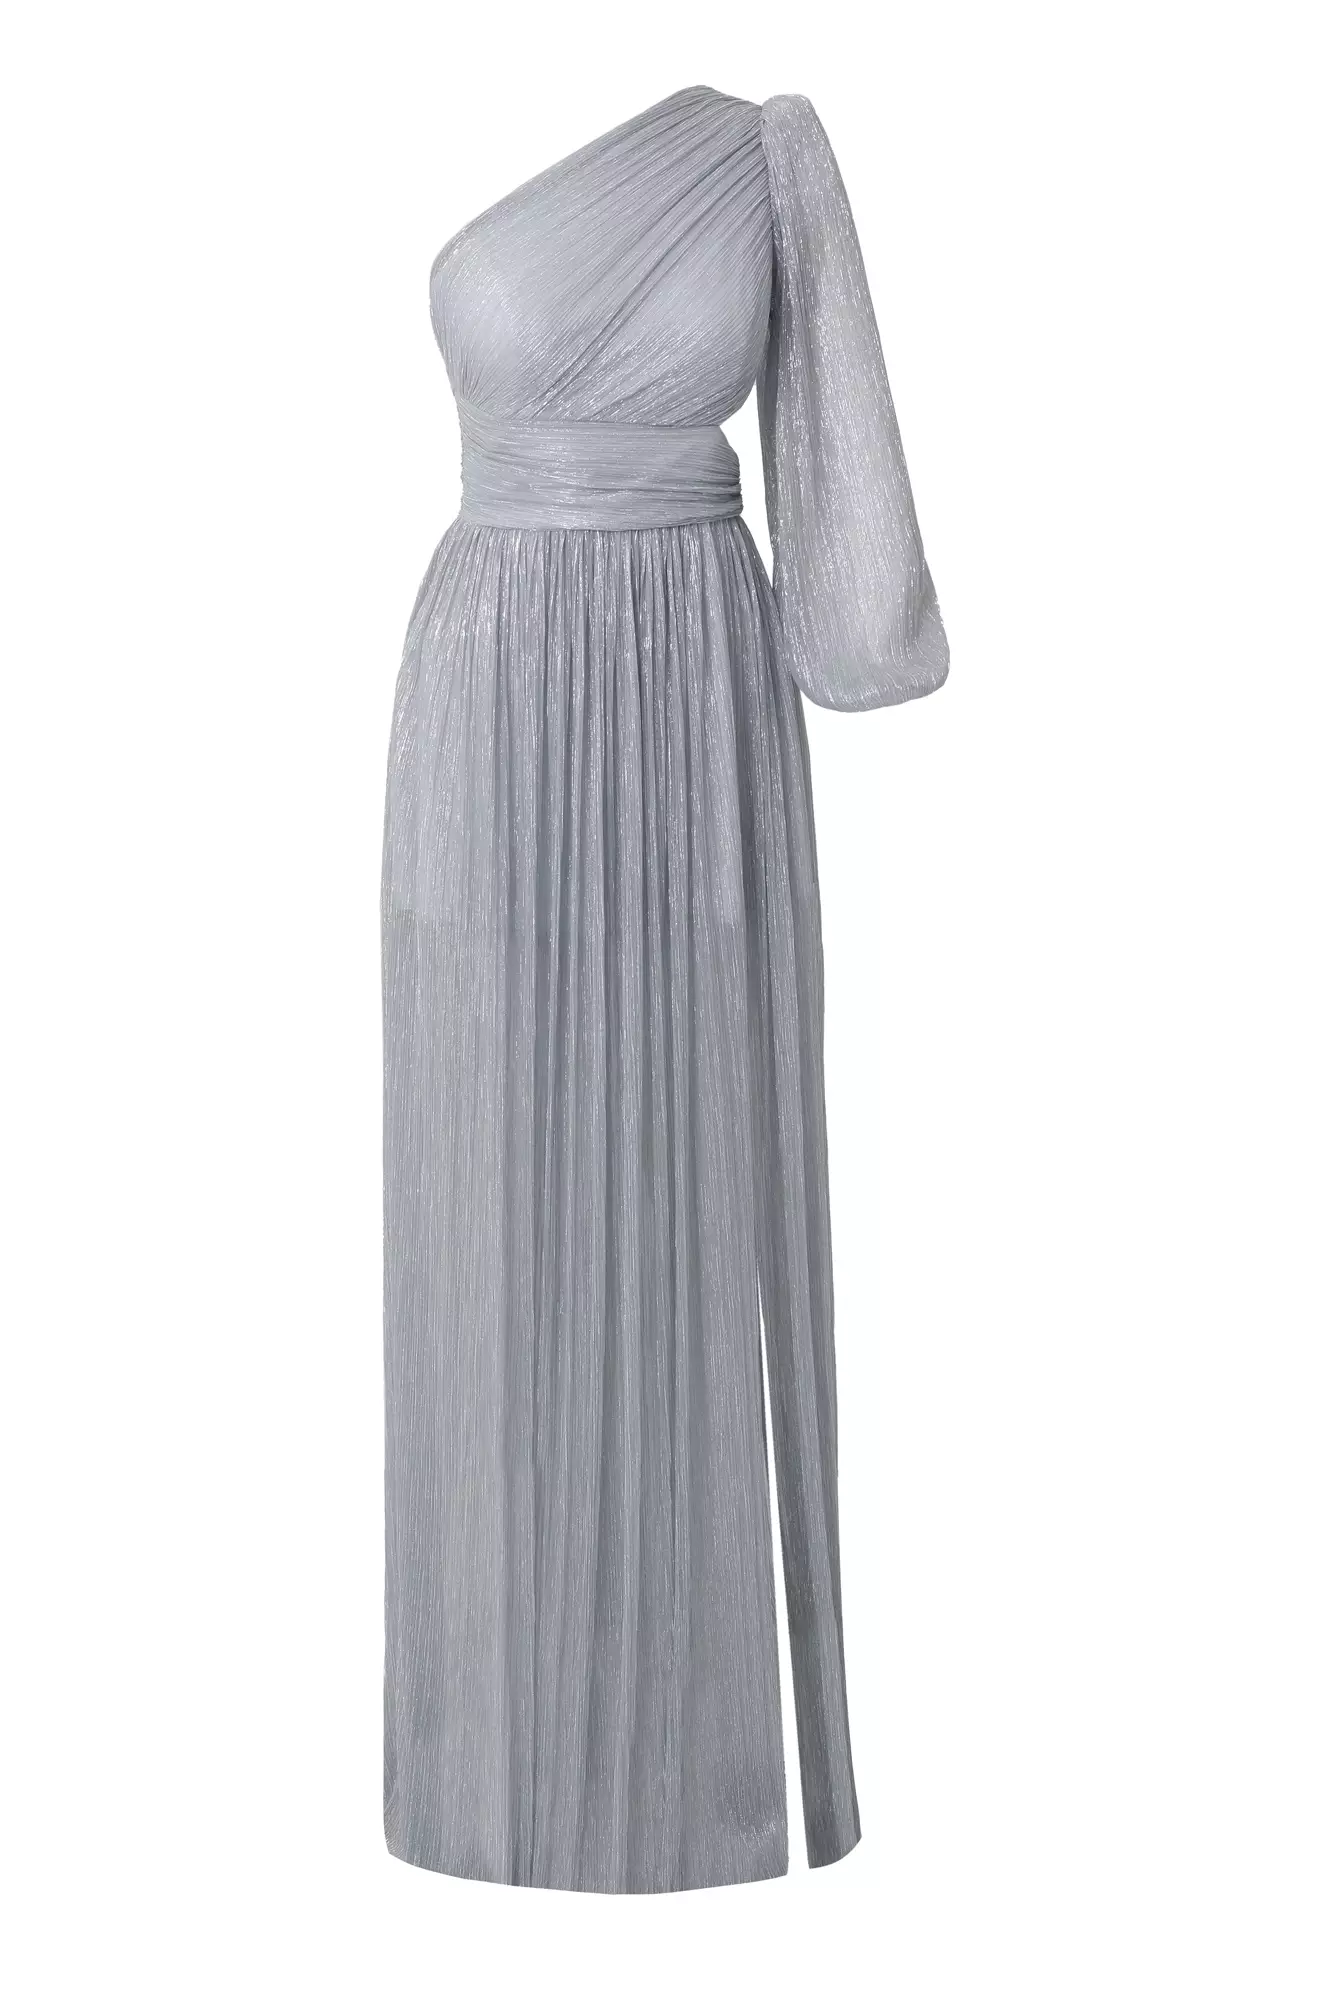 Silver moonlight one arm long dress